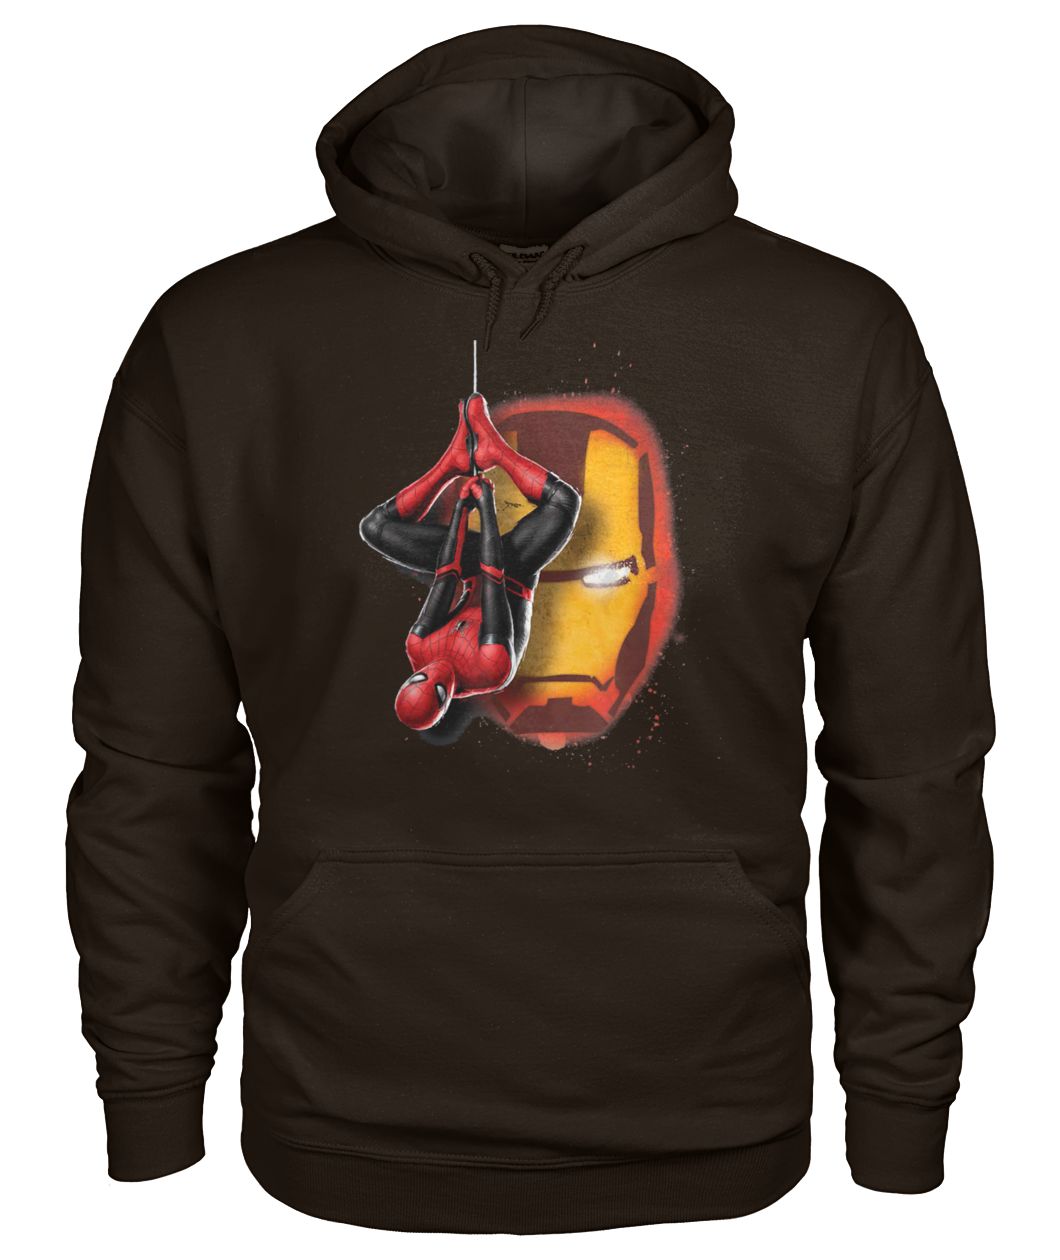 Marvel spider-man far from home Iron man graffiti gildan hoodie